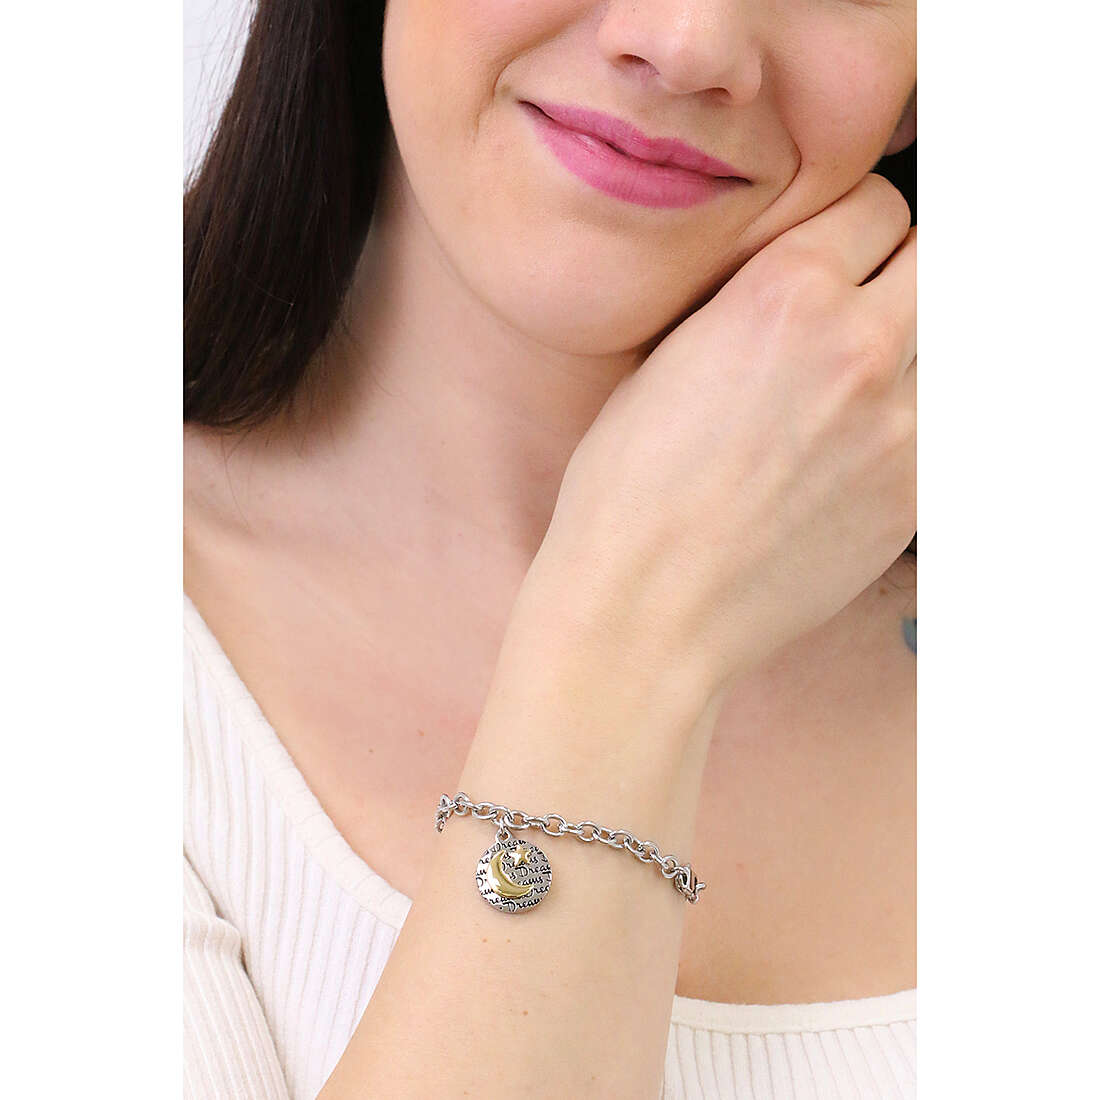 Kidult bracelets Symbols woman 731971 wearing